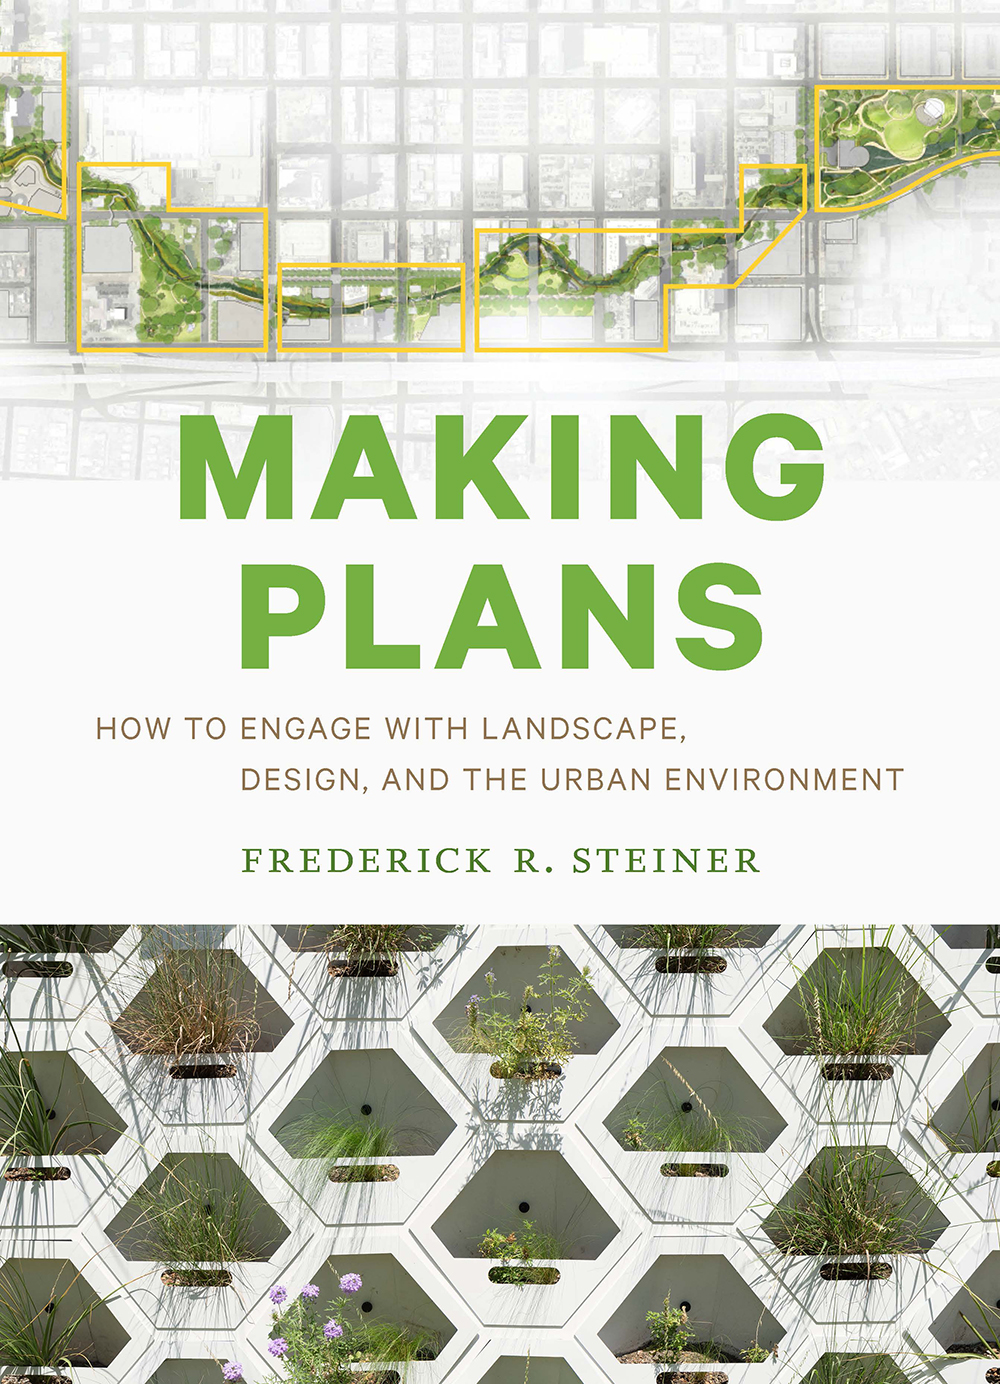 Graduate City and Regional Planning | PennDesign